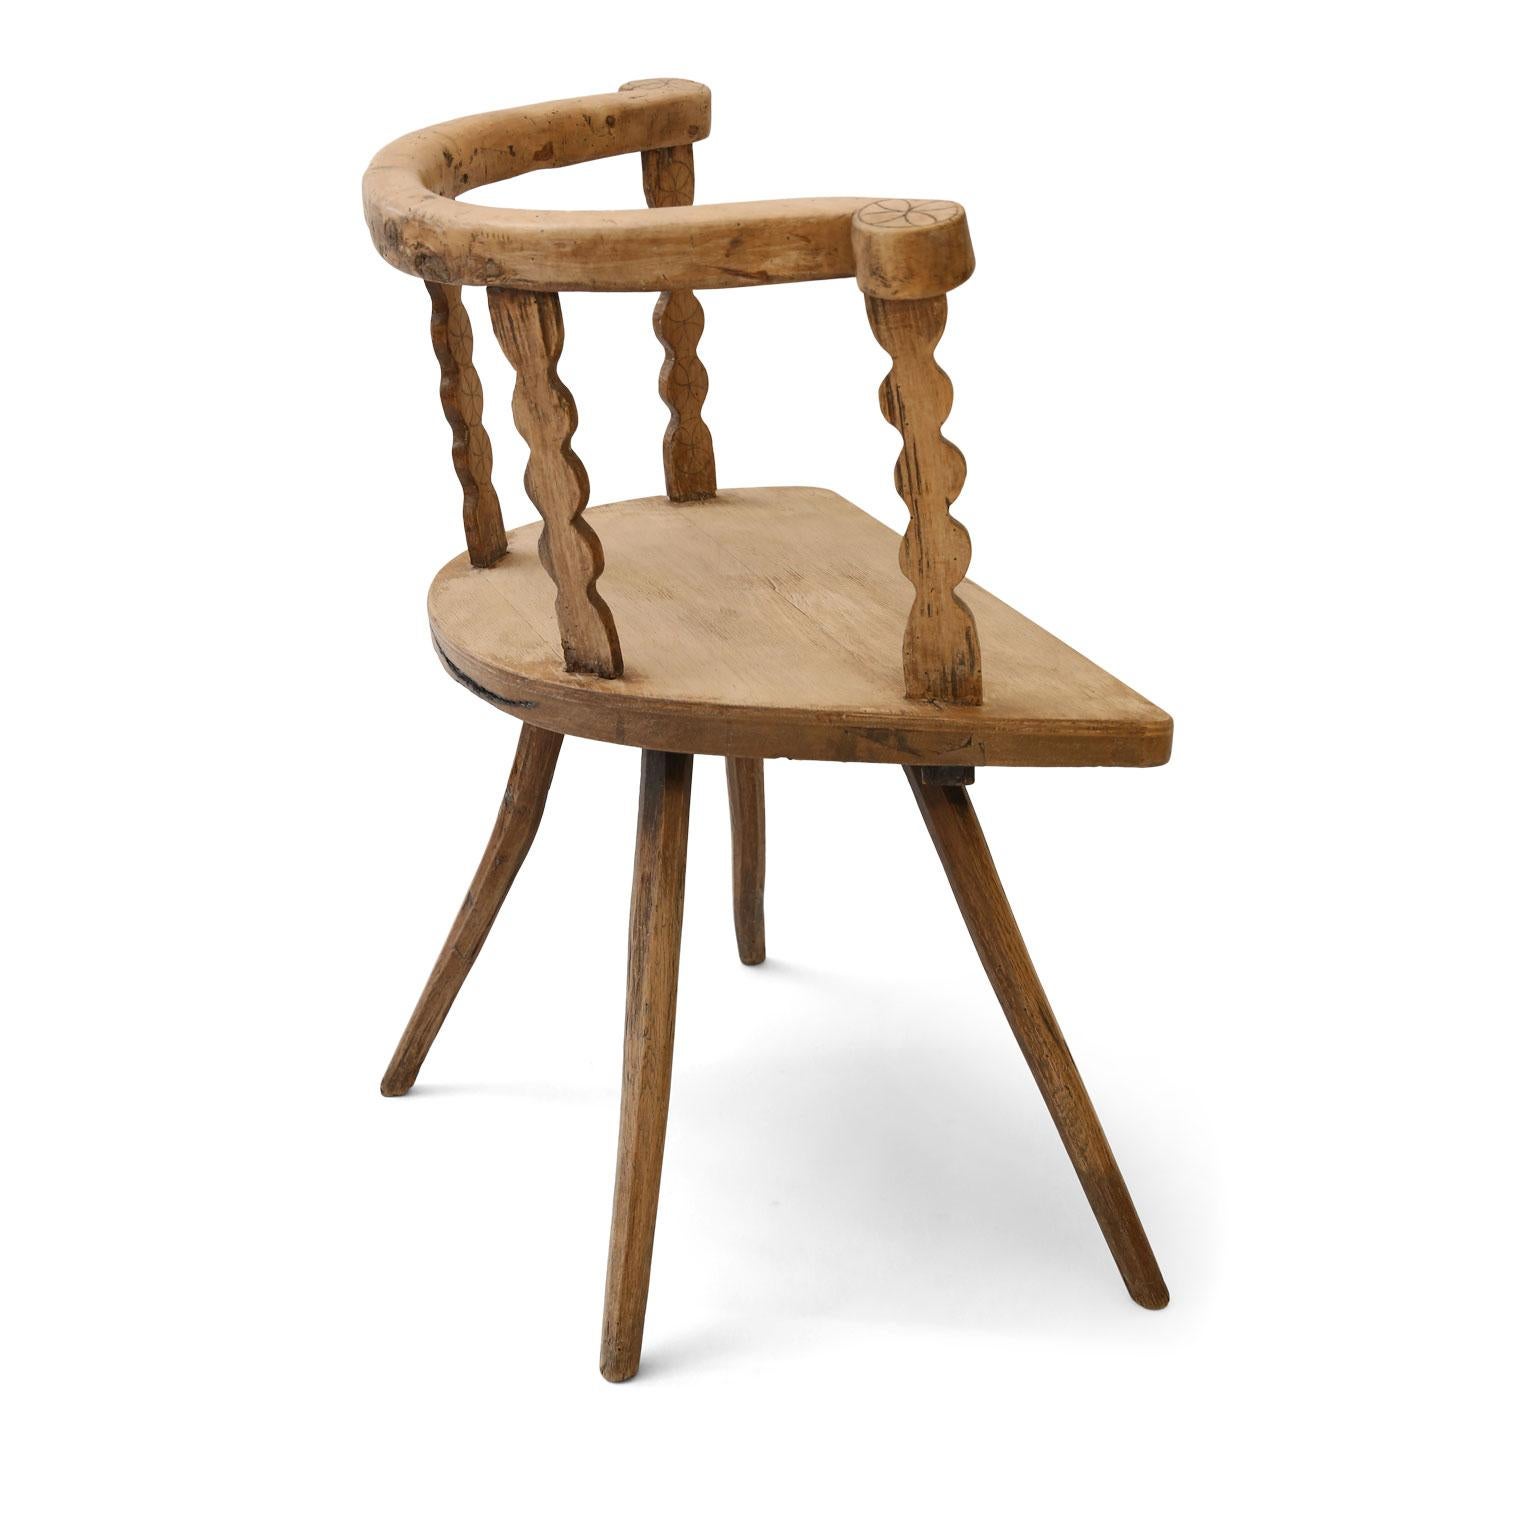 Swedish Vernacular Chair 2